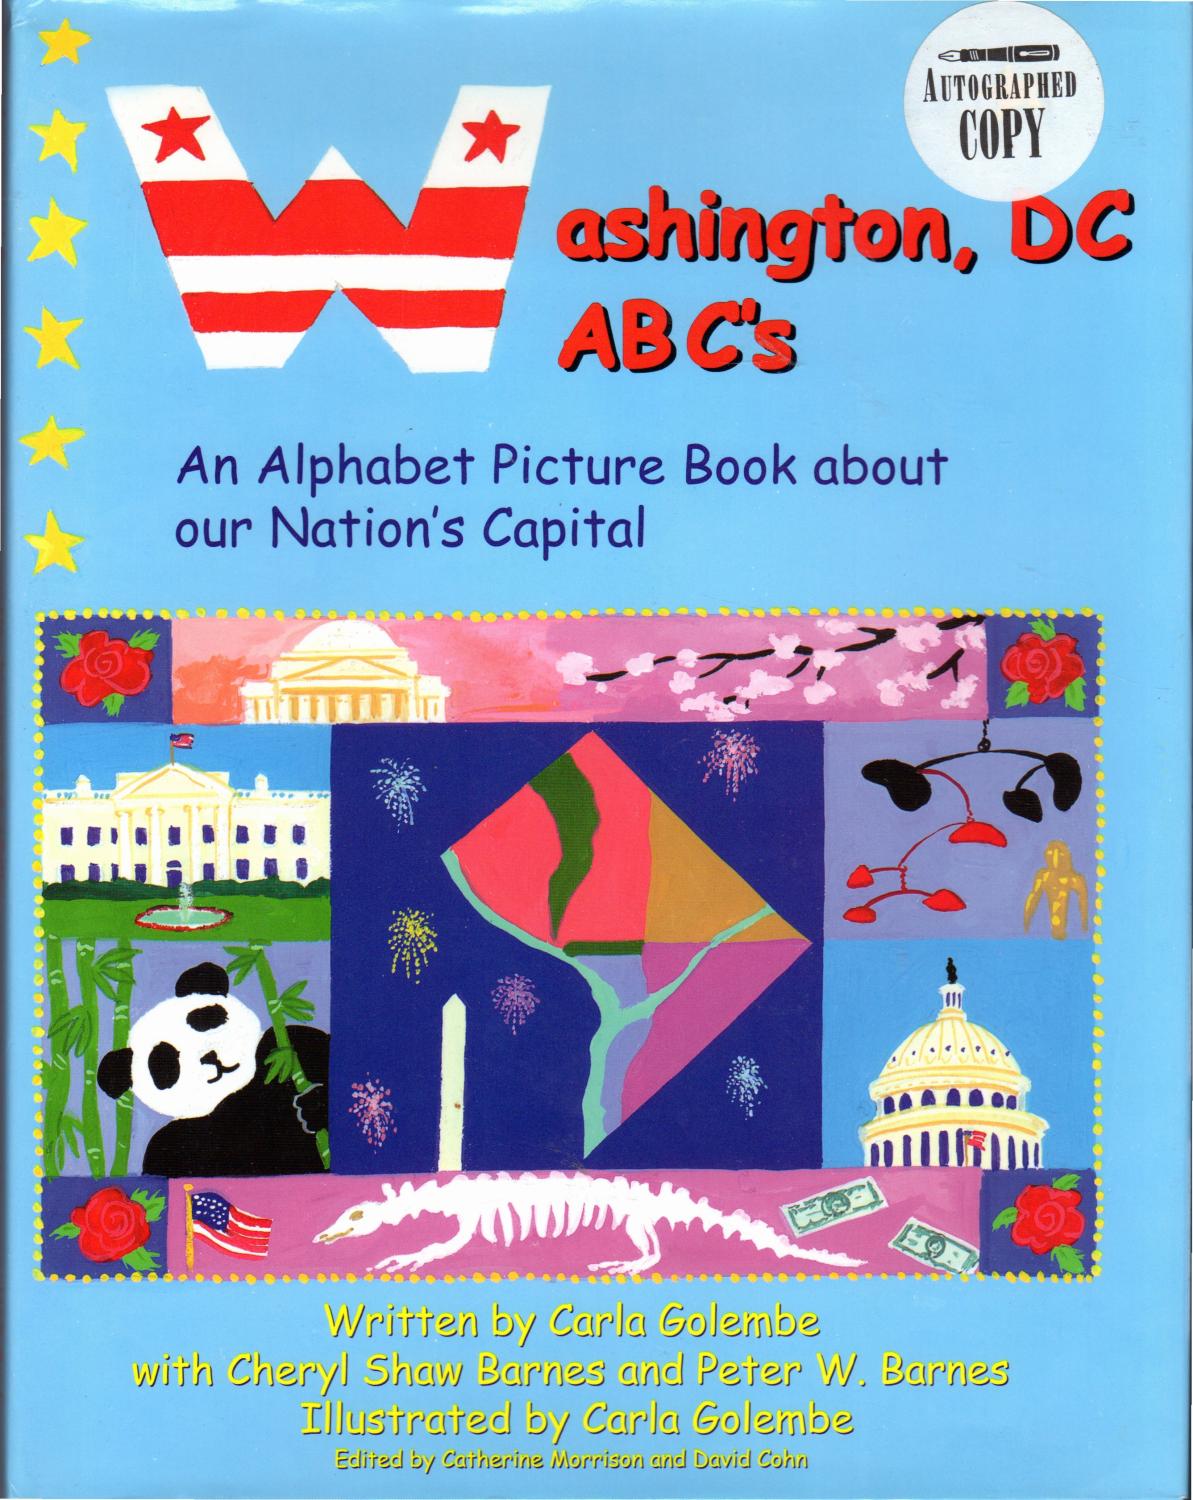 Washington, DC ABC's [Signed By Author] - Golembe, Carla:. Barnes, Peter W. & Barnes, Cheryl Shaw